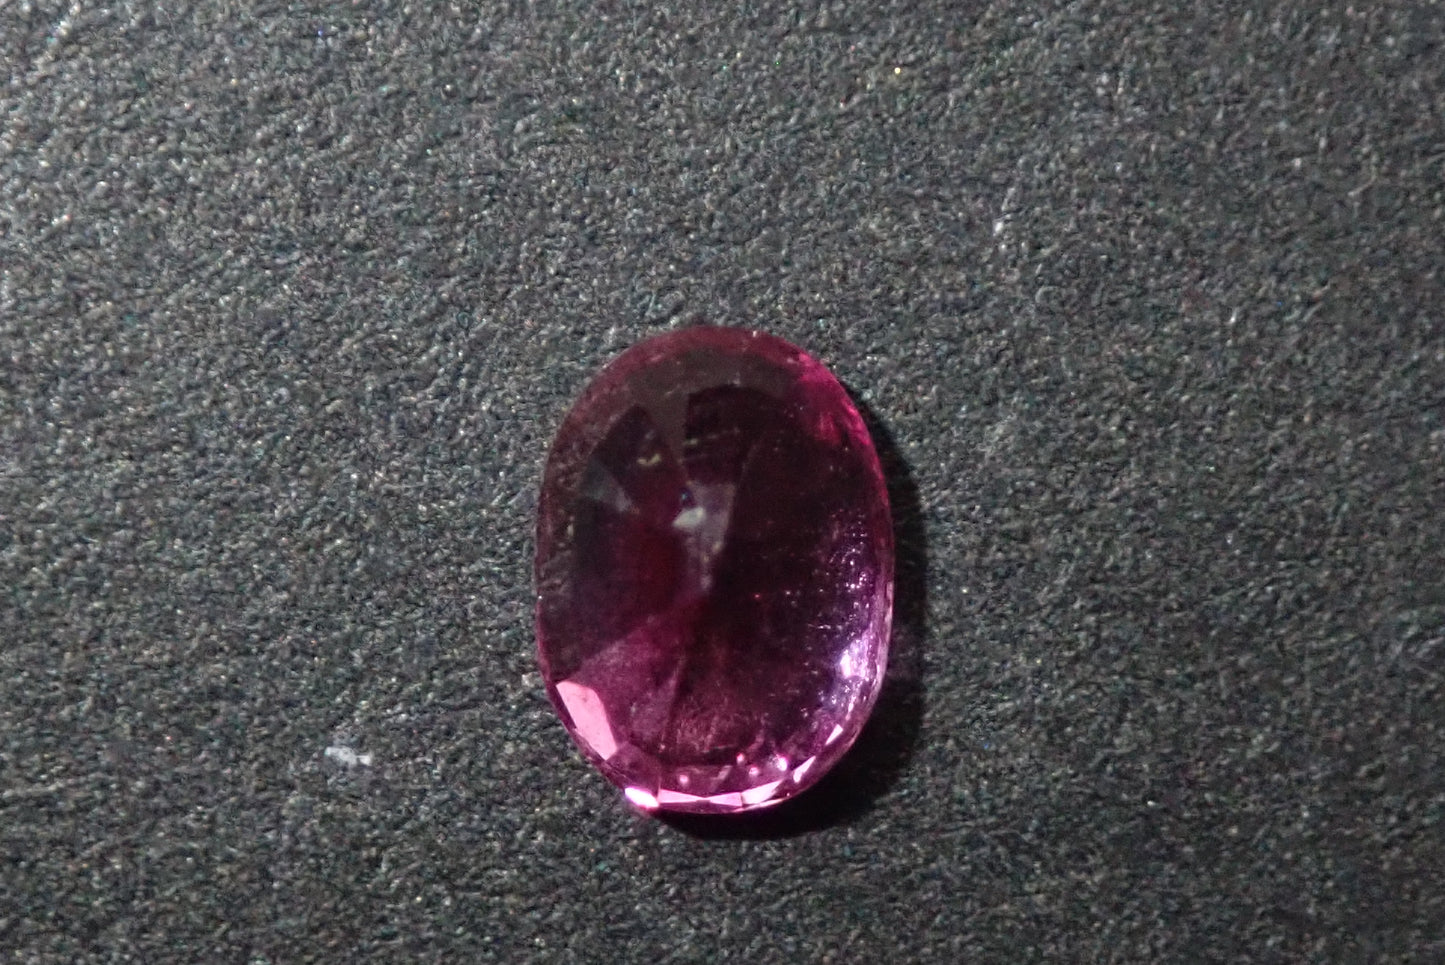 Violet pink sapphire 0.558ct